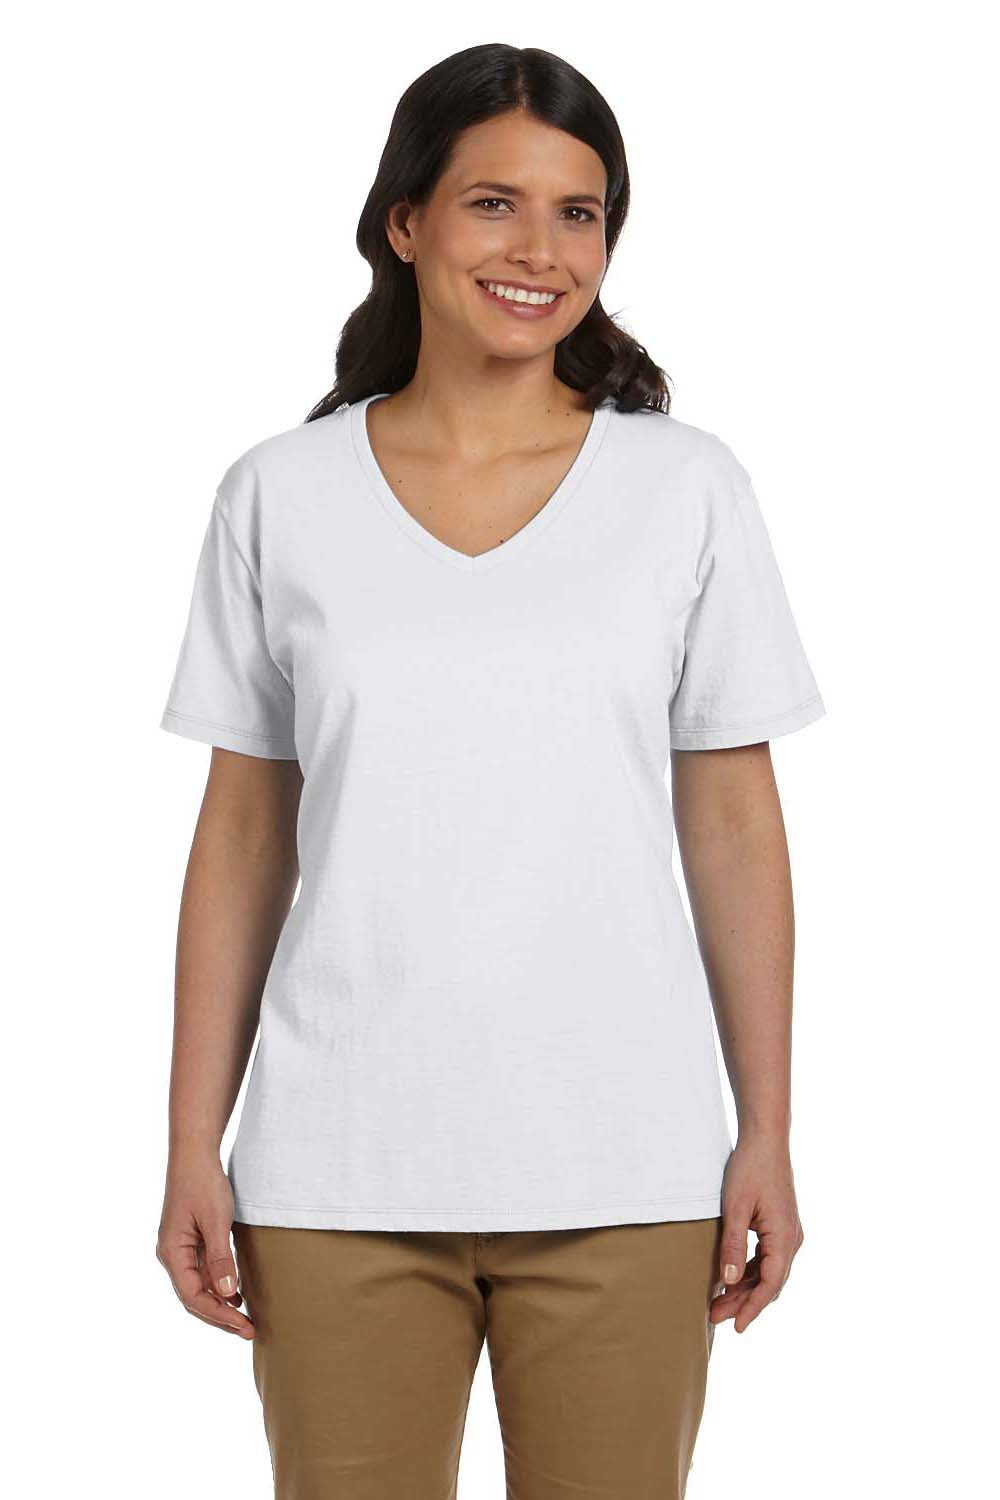 Hanes 5780 Womens ComfortSoft Short Sleeve V-Neck T-Shirt White Front